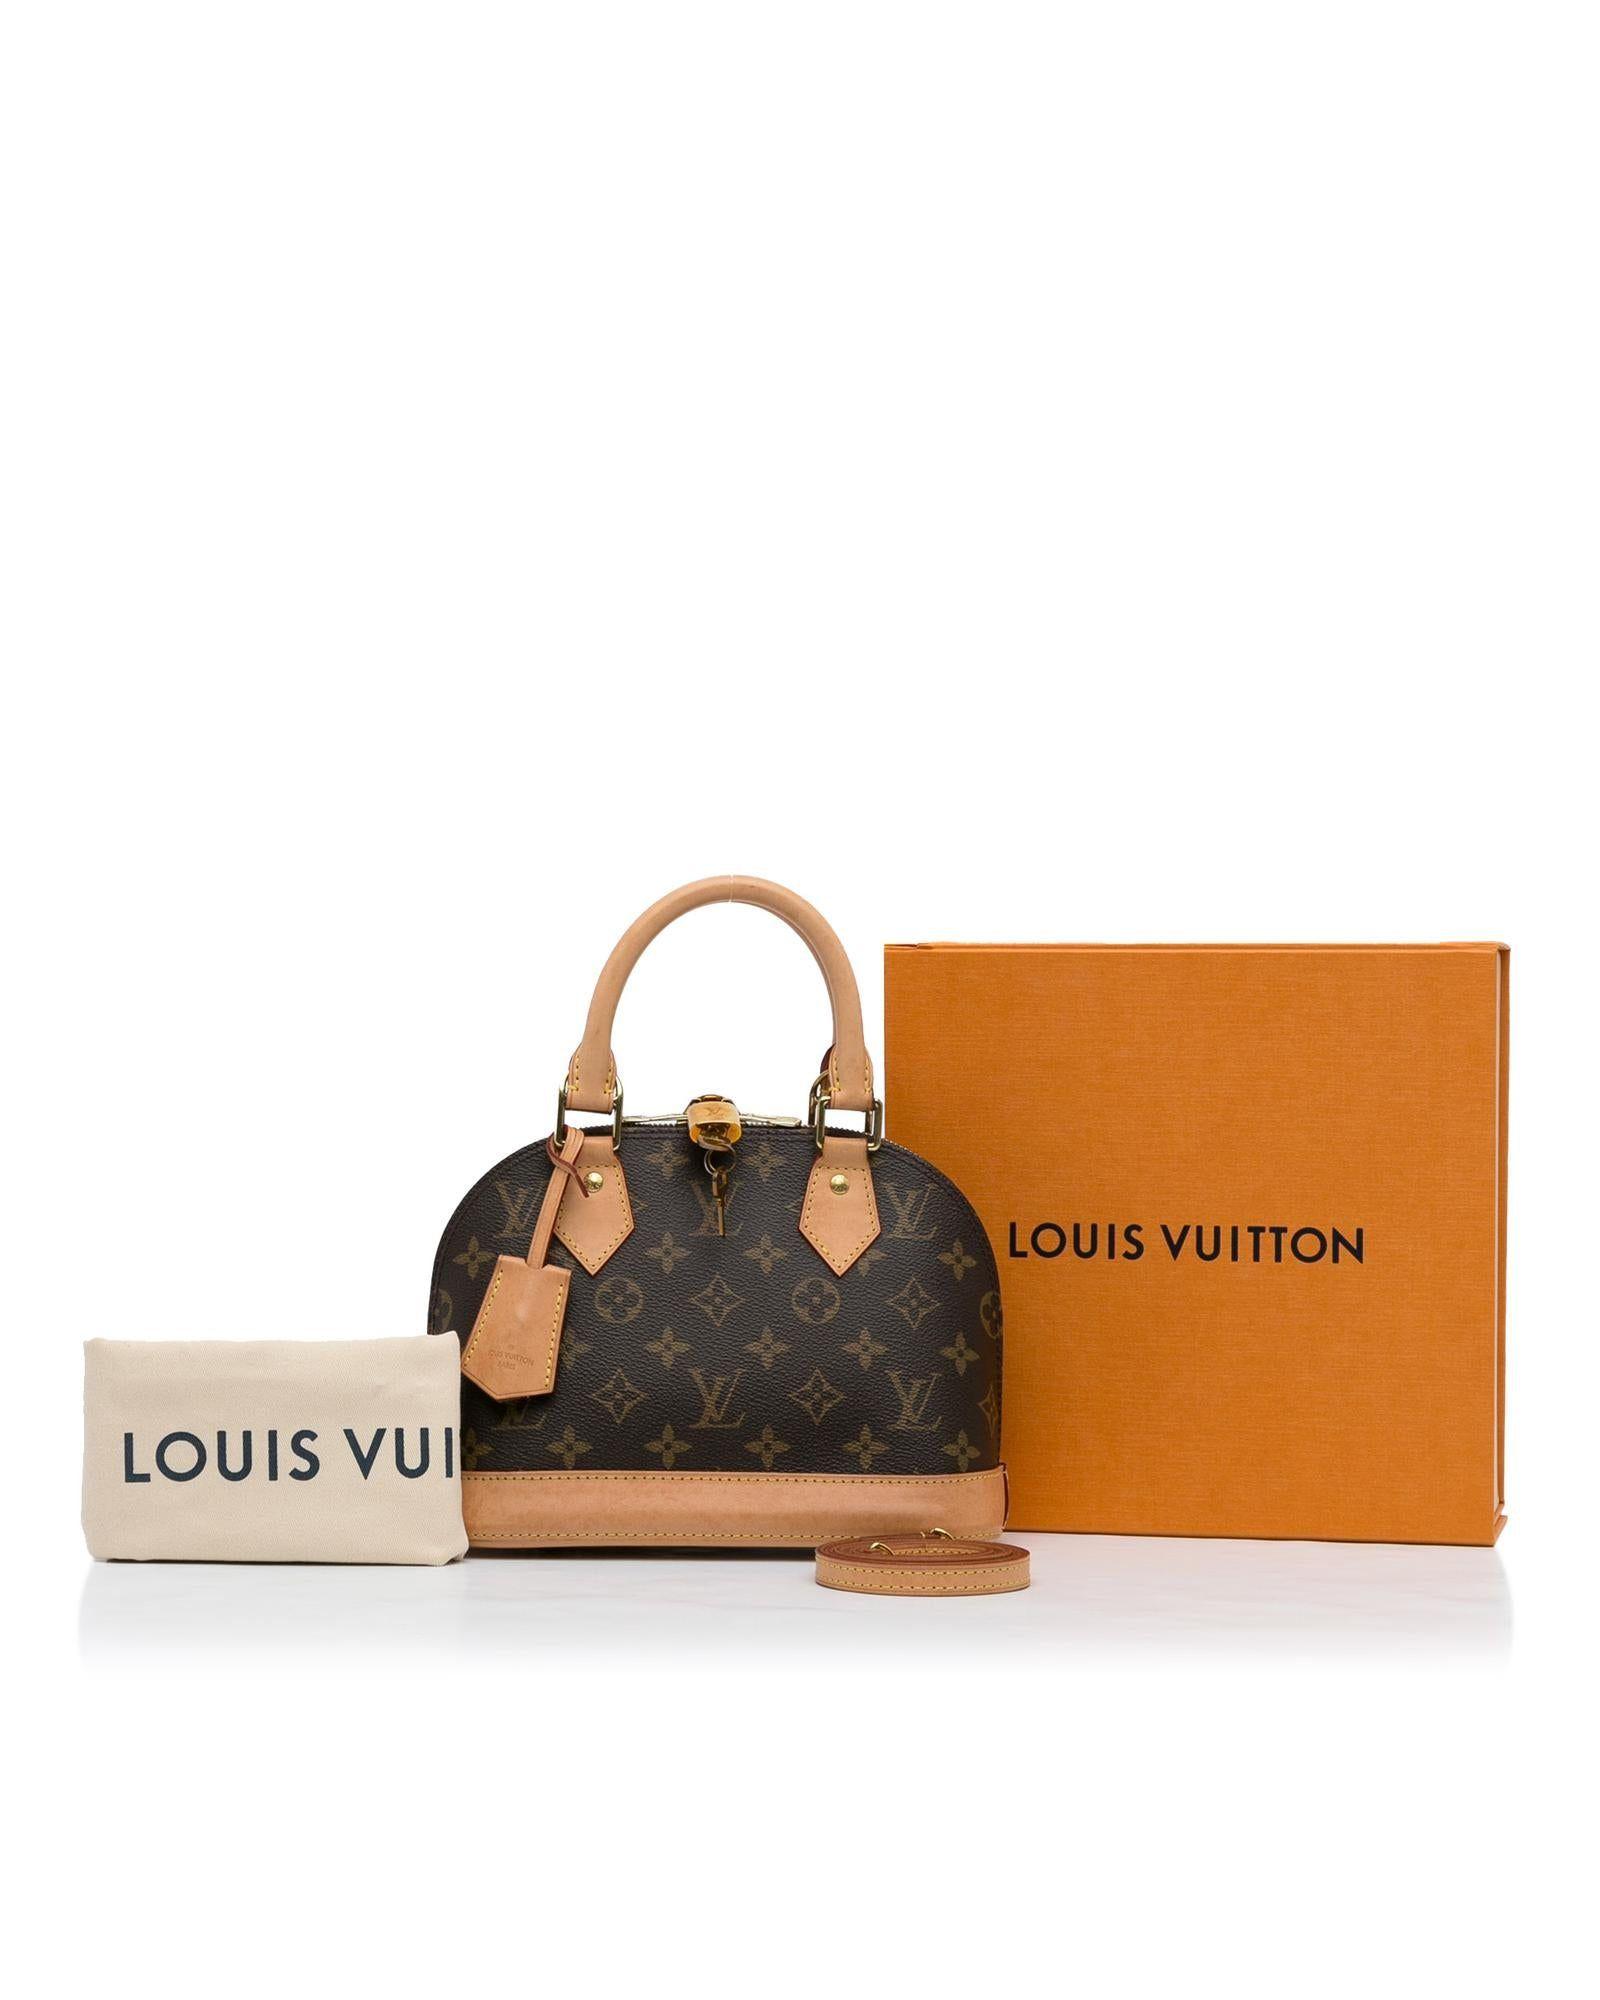 Louis Vuitton Monogram Canvas Top Handle Bag in Black